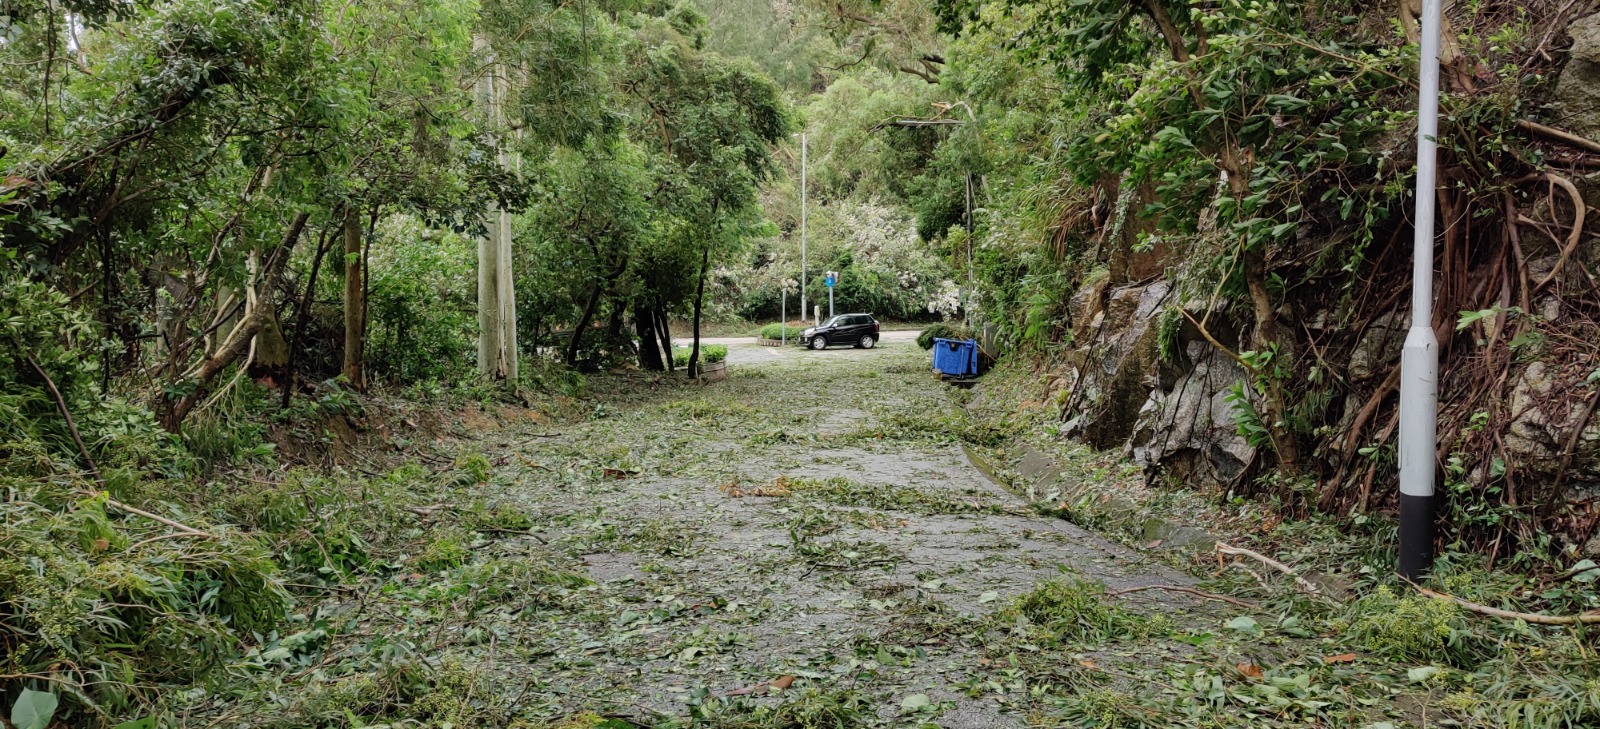 Macao spared major damage despite signal No. 10 during Typhoon Higos